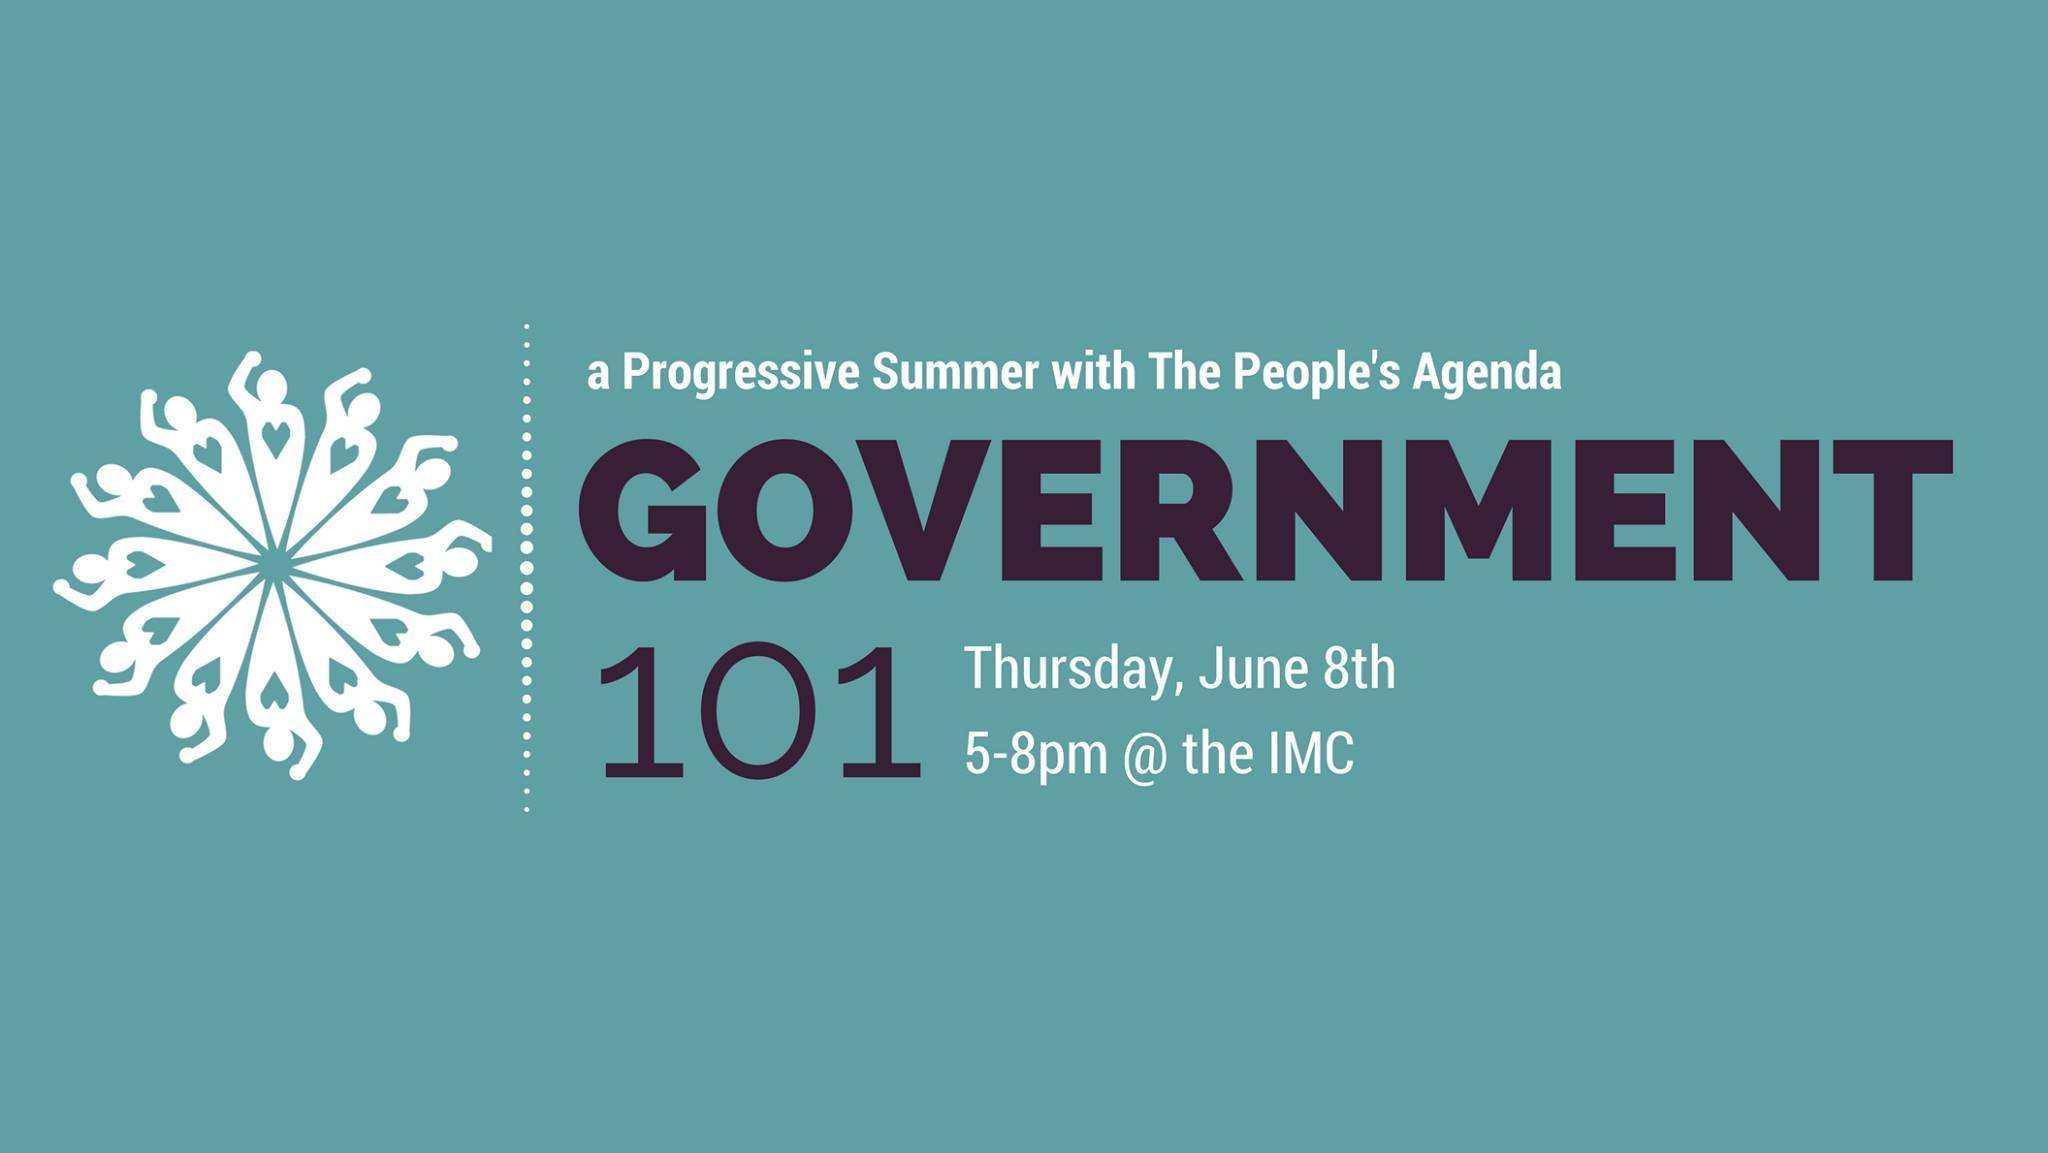 The People’s Agenda is hosting three “progressive summer” events